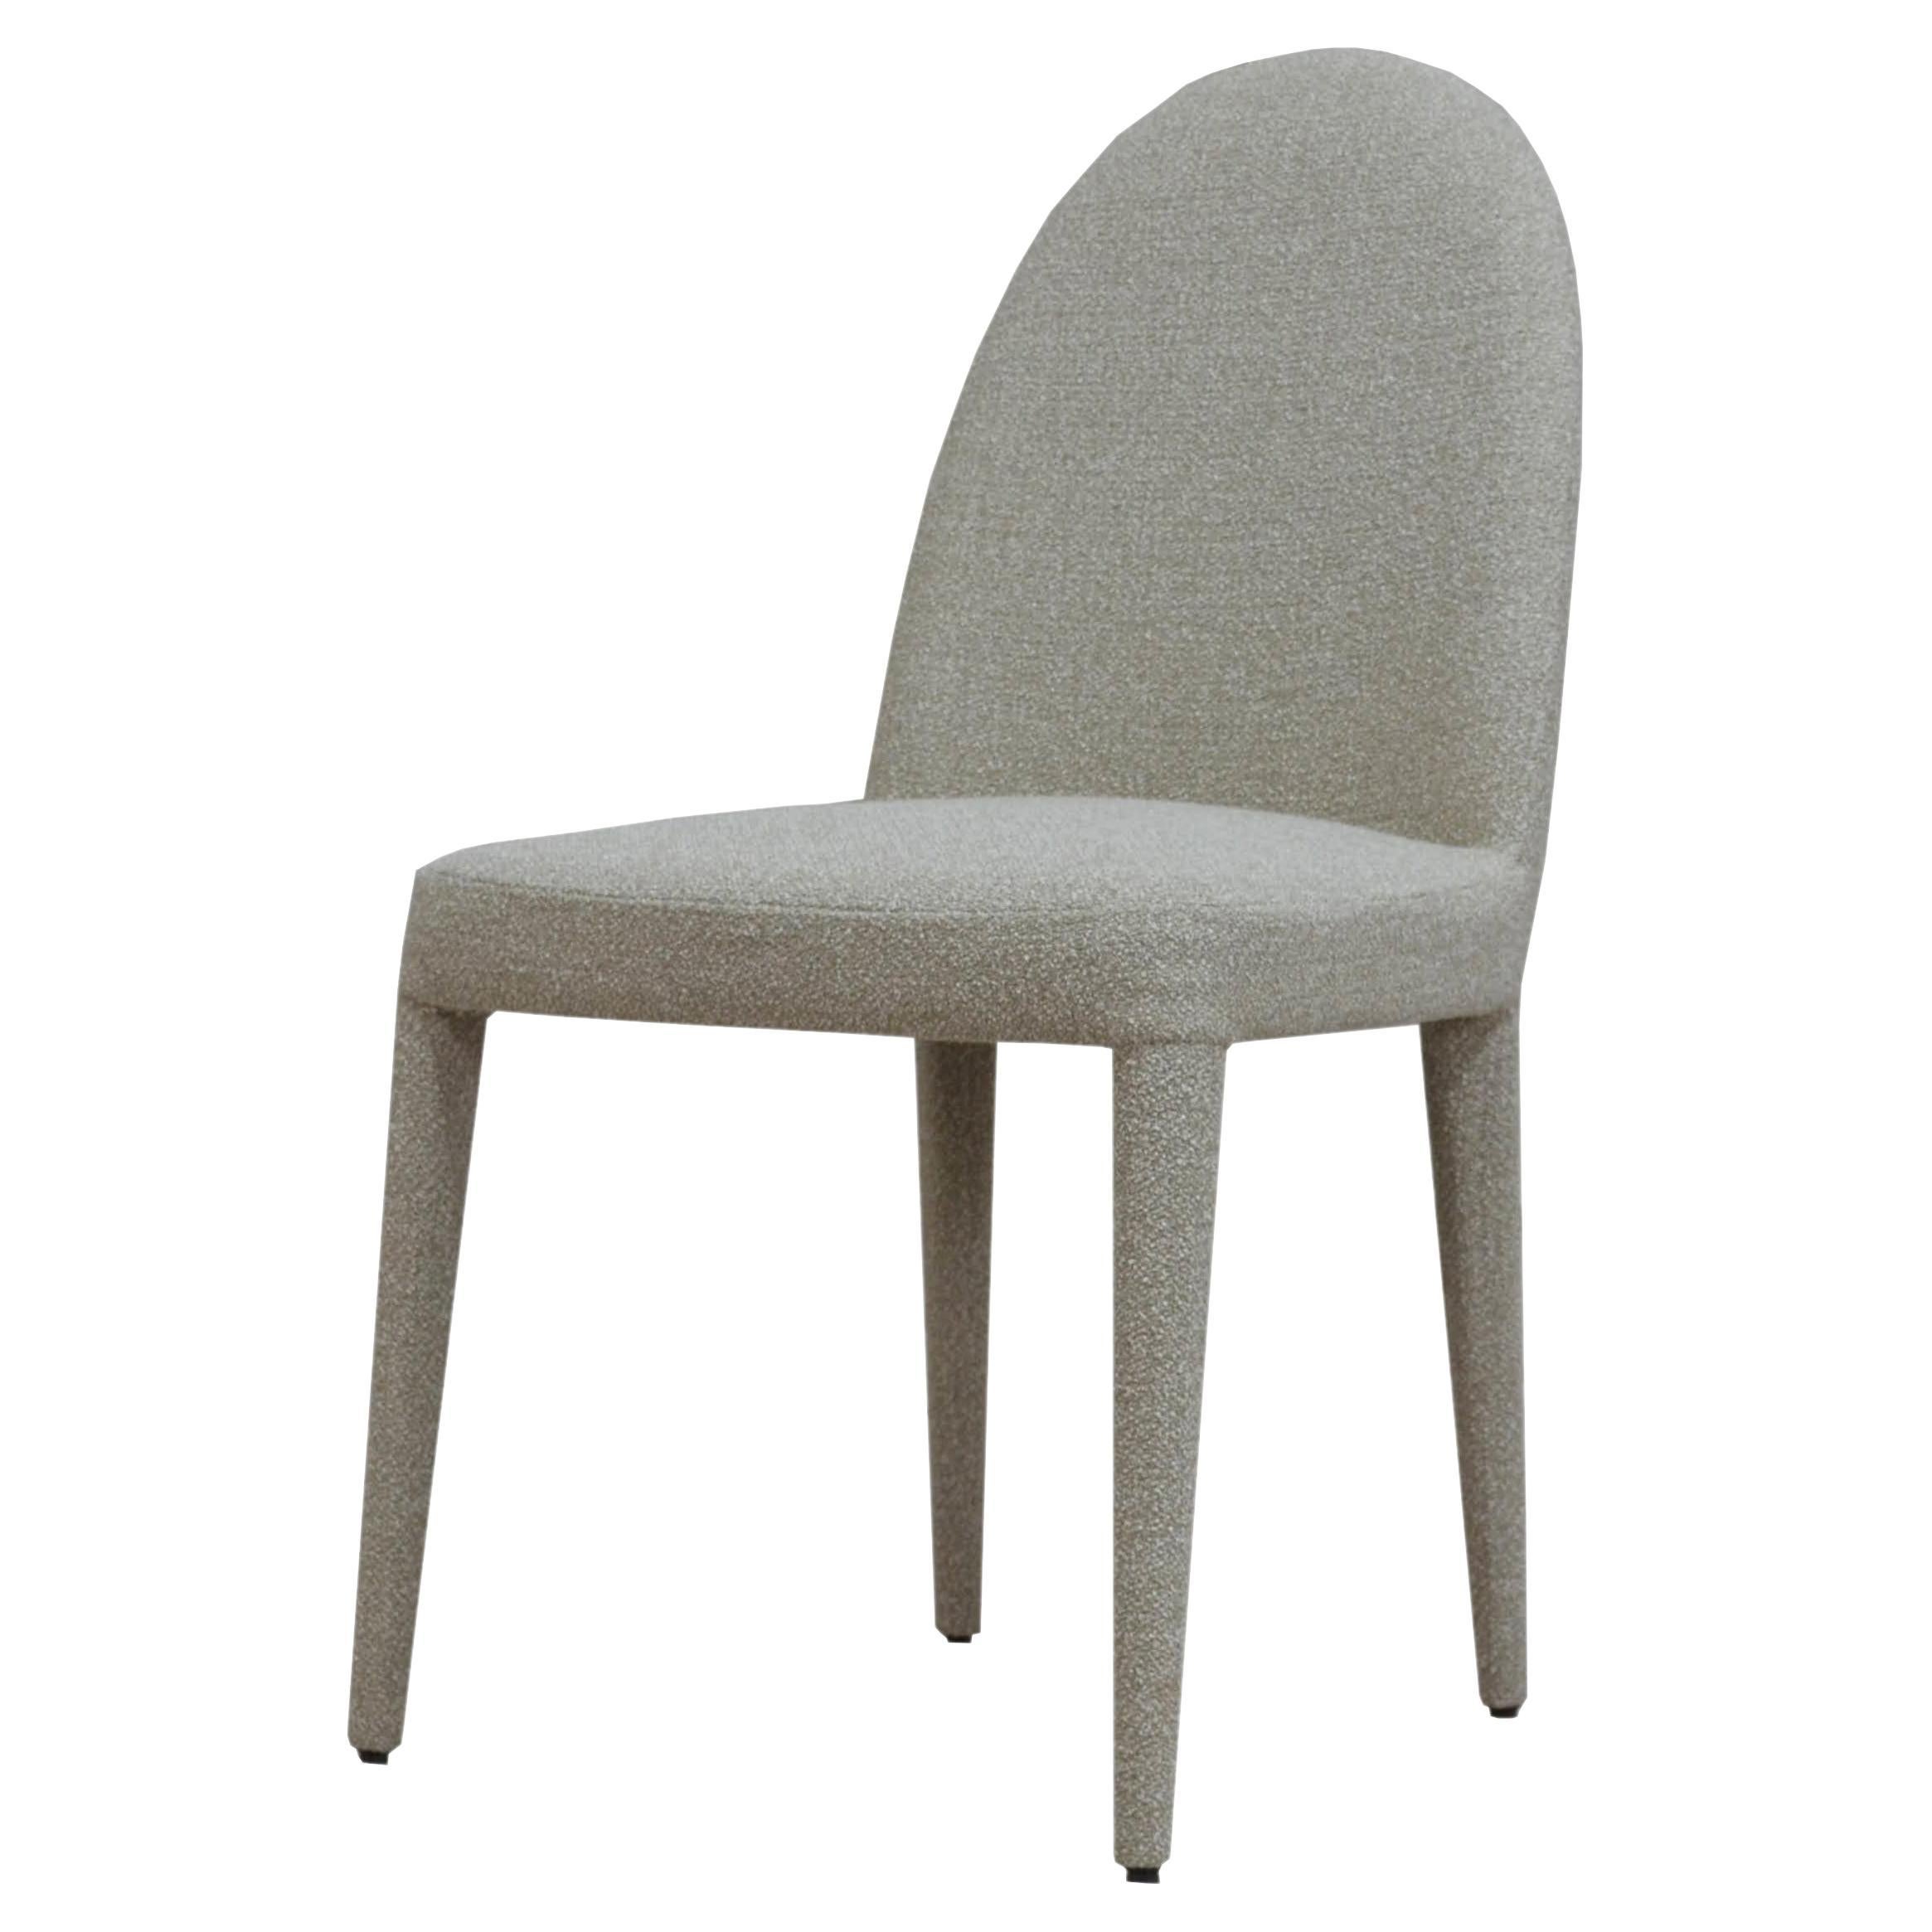 Balzaretti XL Contemporary Upholstered Dining Chair in Torri Lana Boemian Fabric